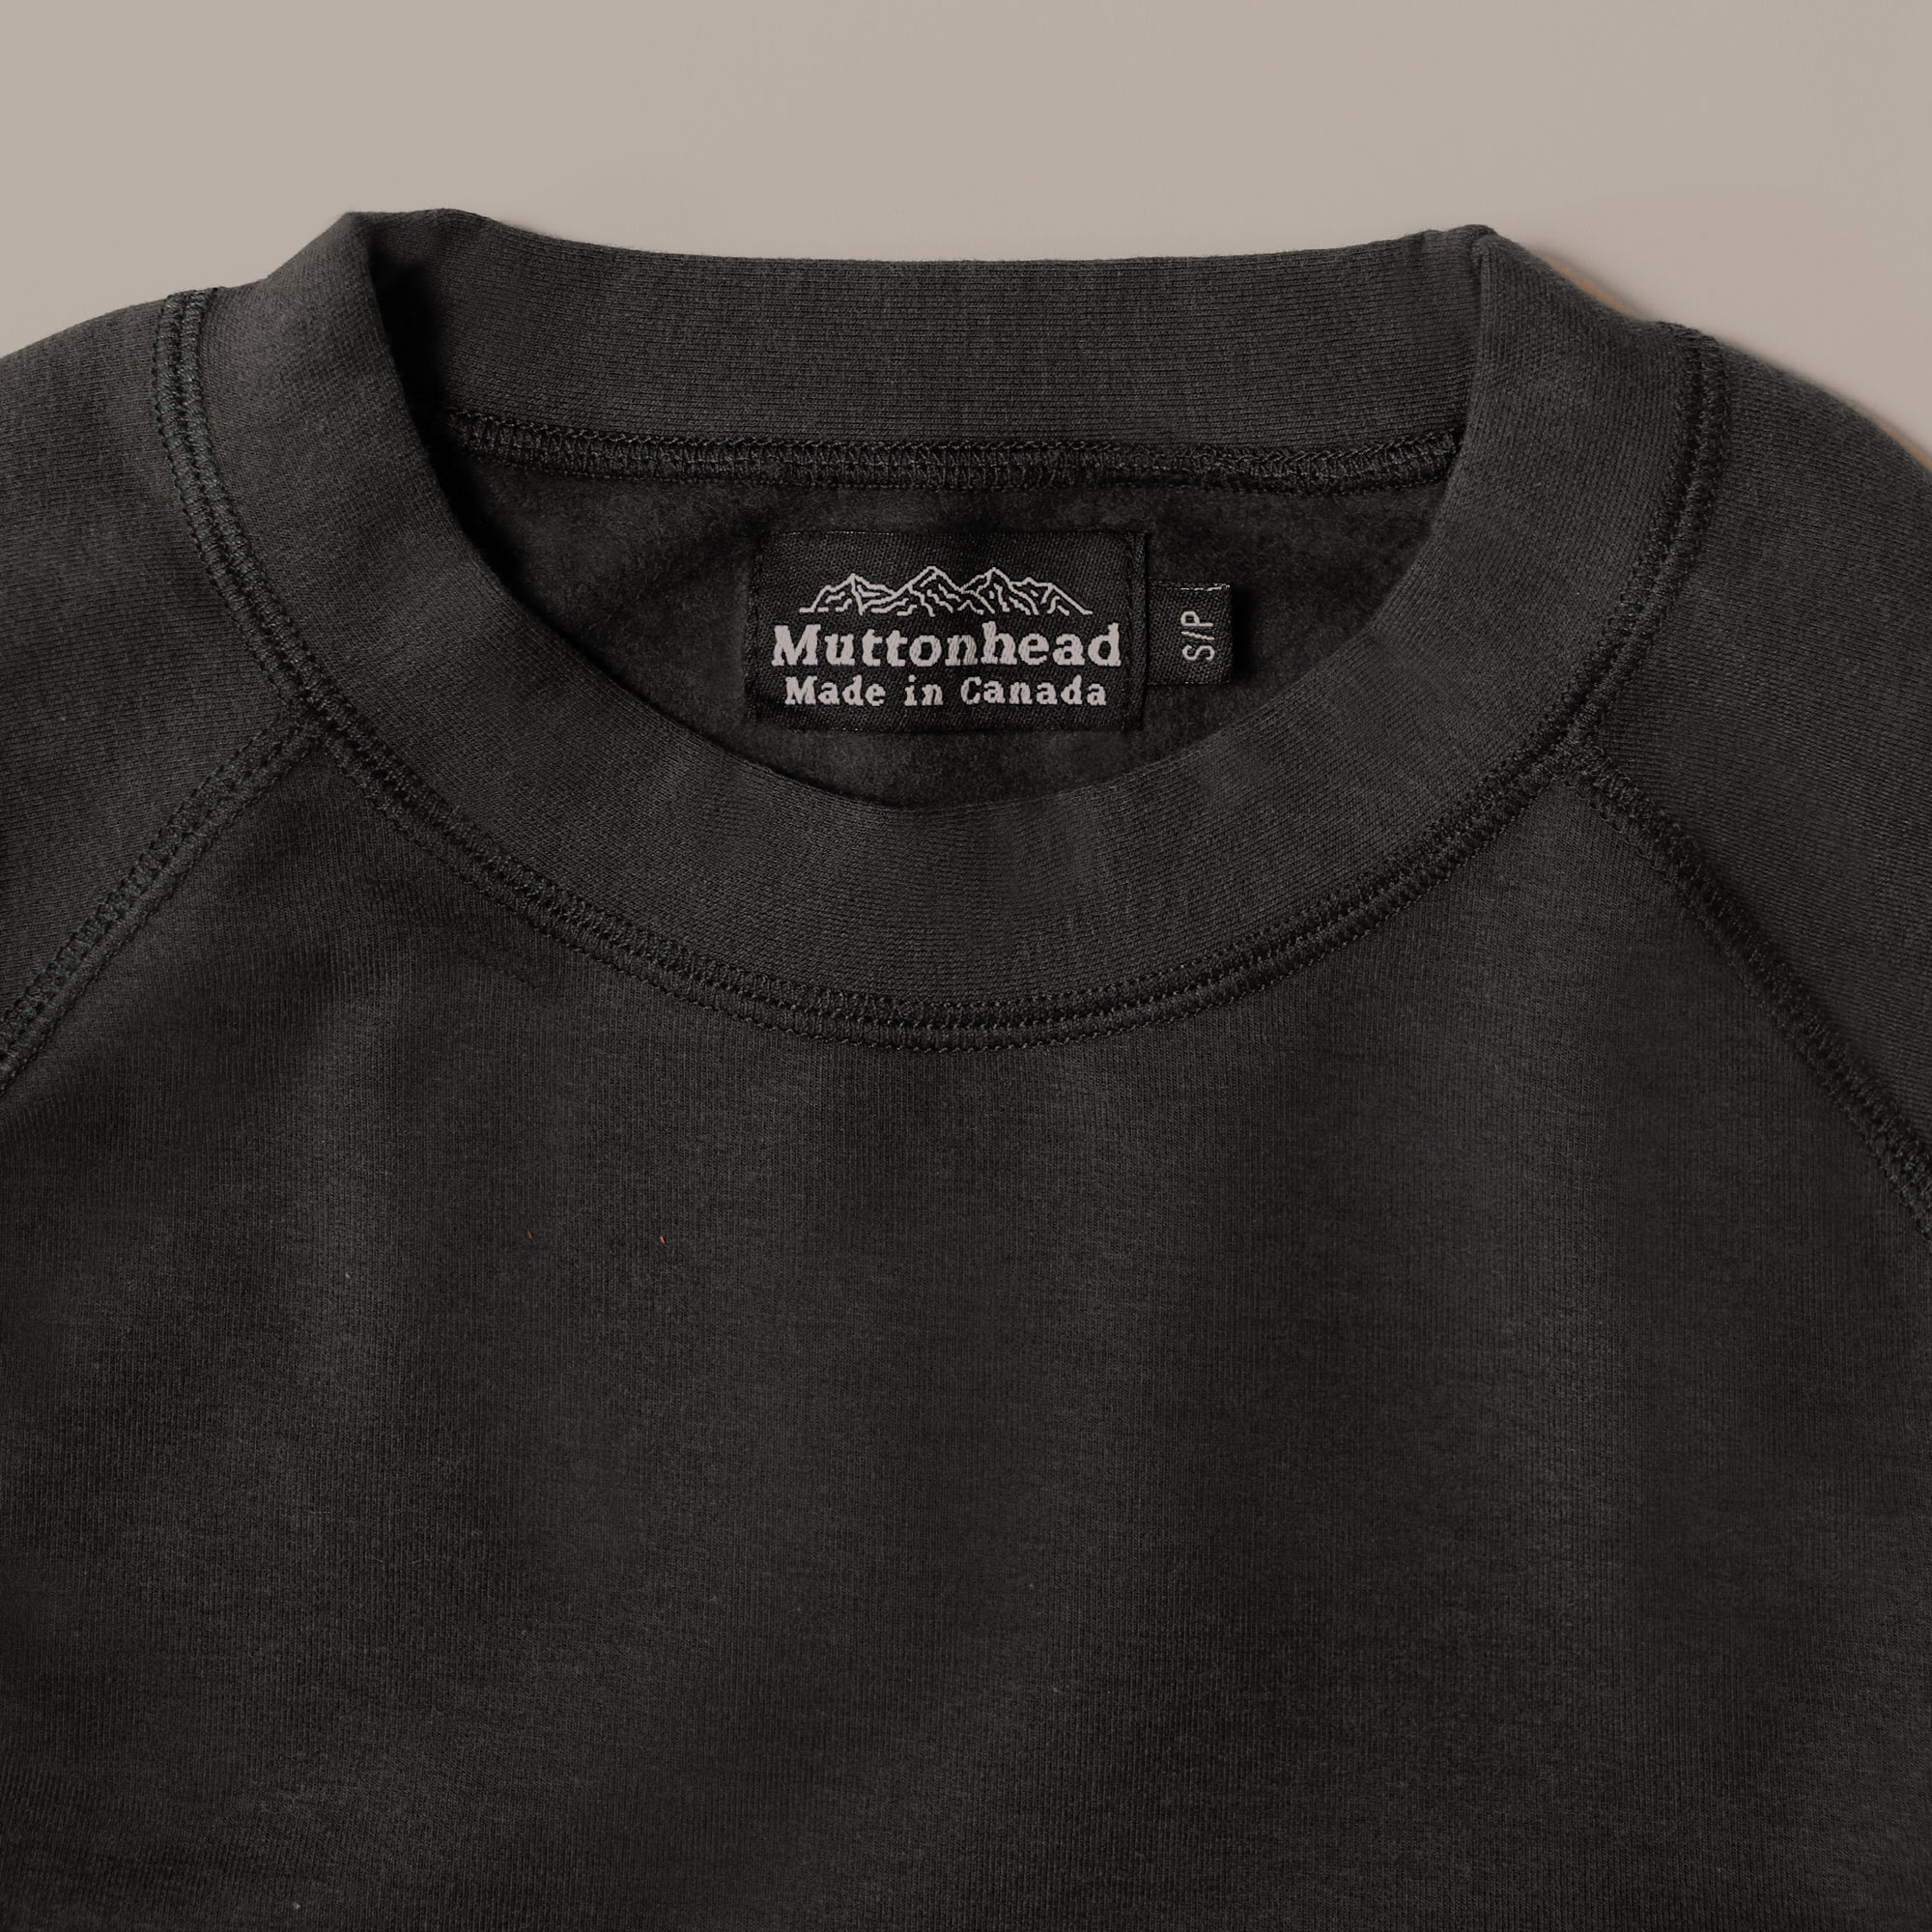 Bamboo Base Layer Shirt - Black